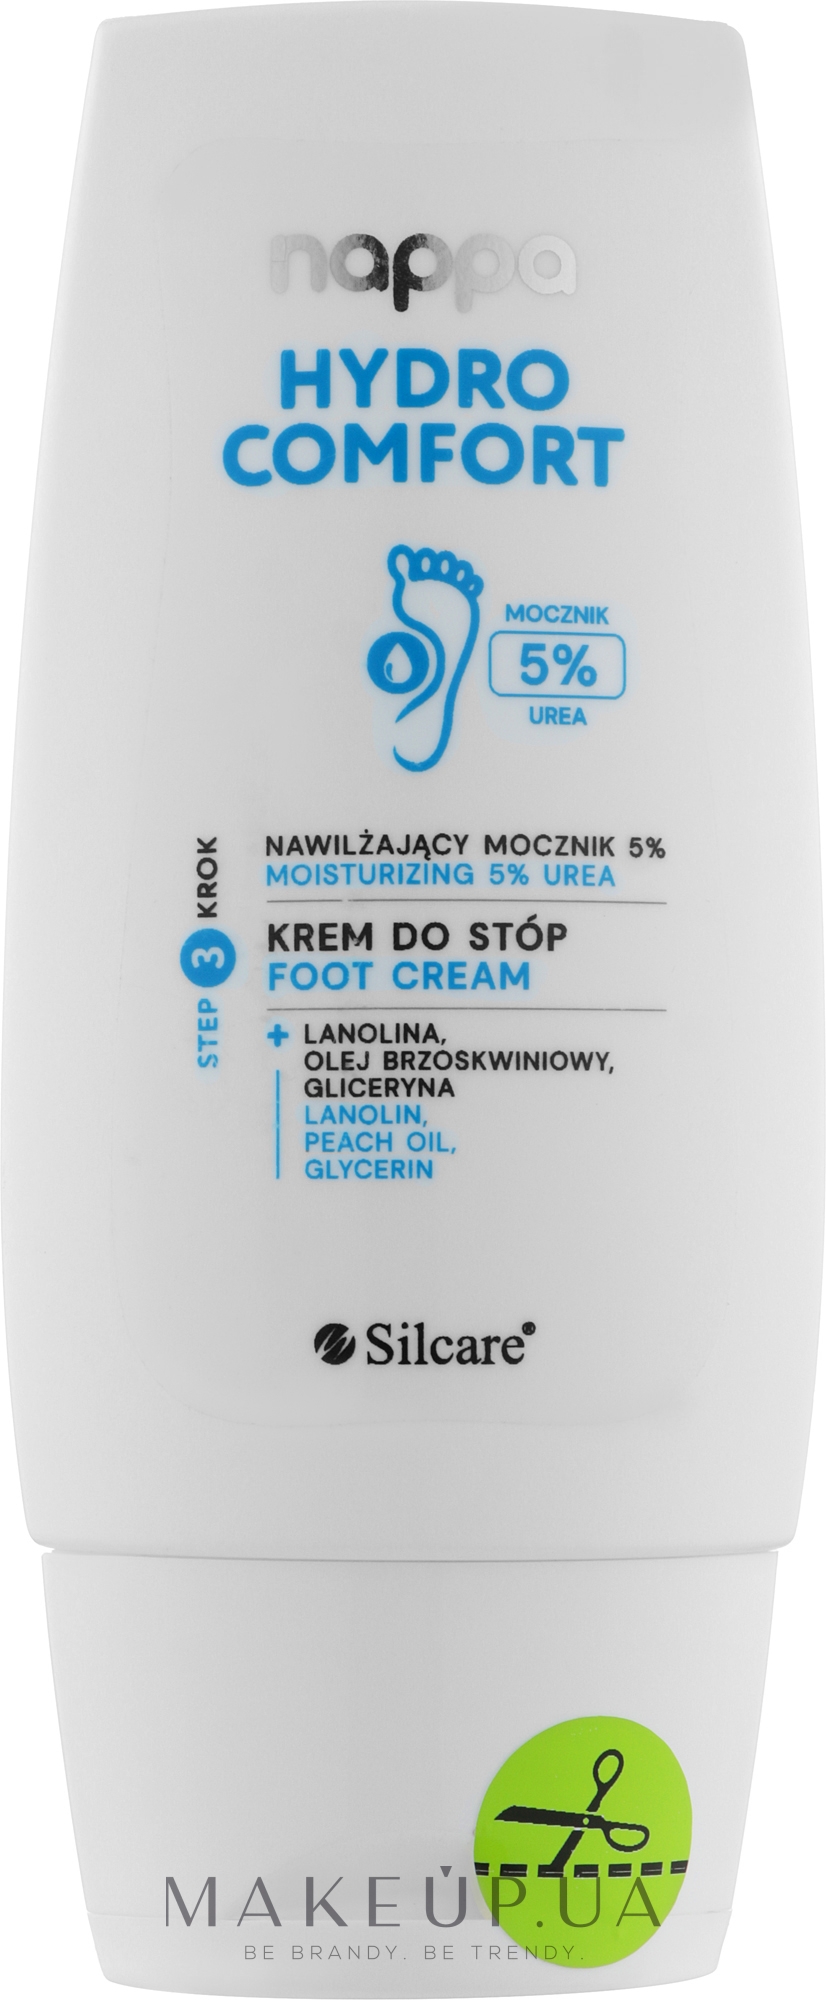 Крем для ног с мочевиной 5% - Silcare Nappa Urea 5% Foot Cream — фото 100ml